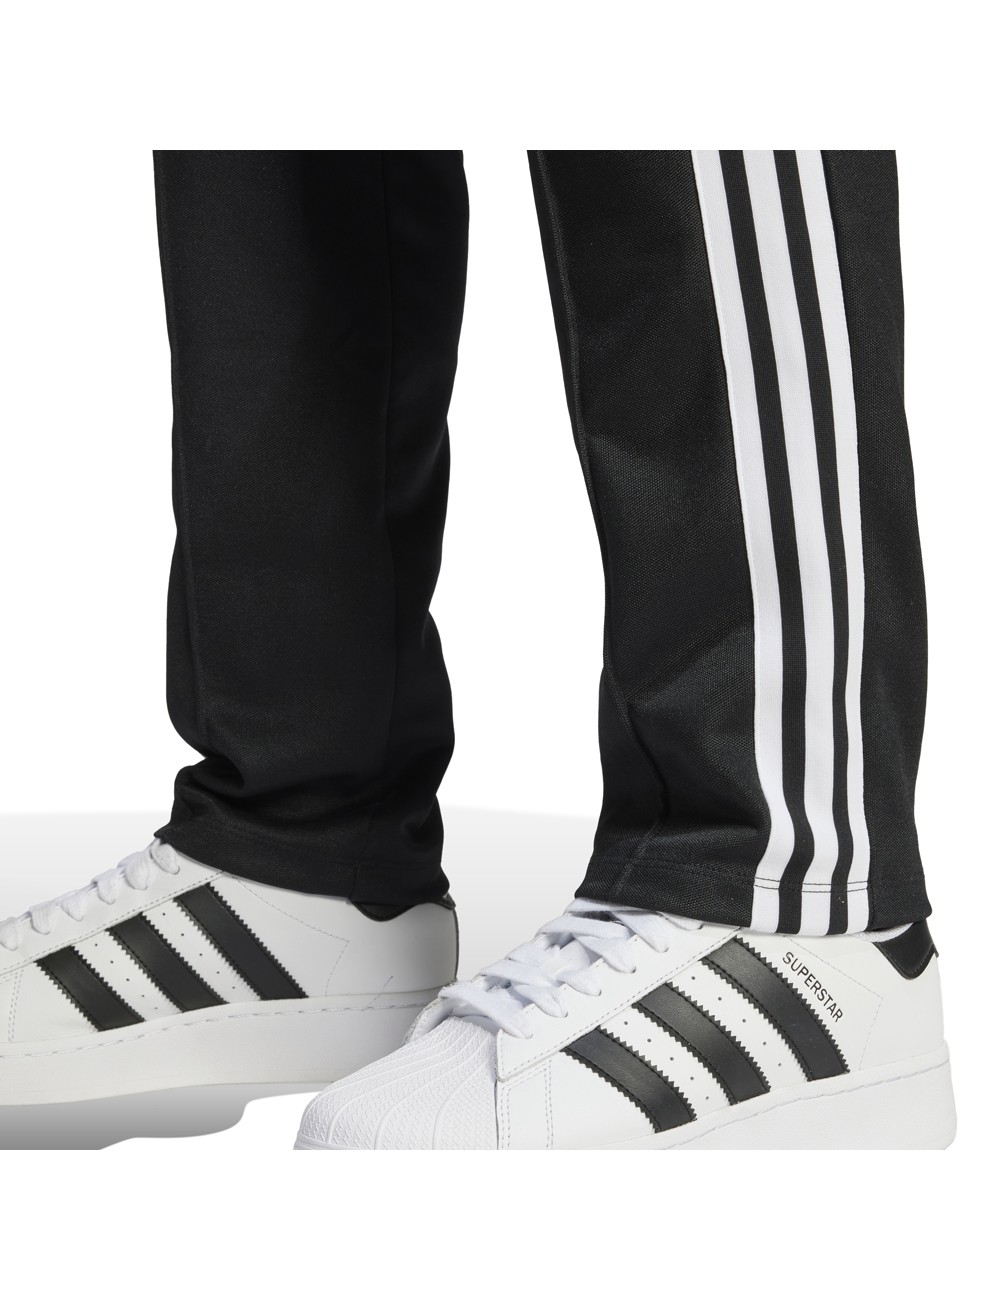 Adidas Pantalon De Survêtement Montreal Black White IU2521